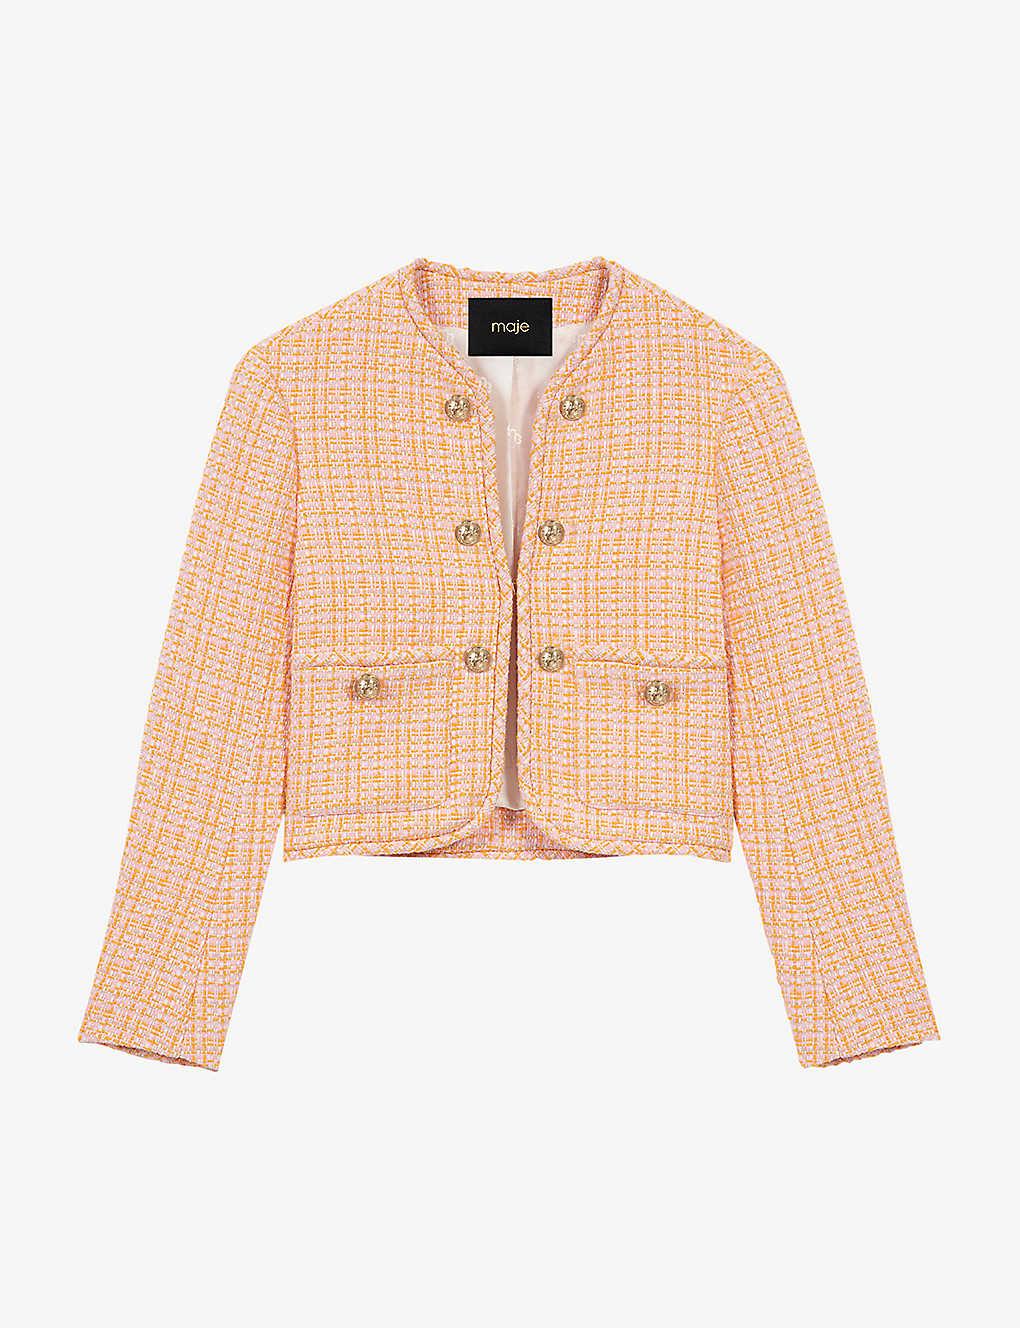 Maje Button-embellished Tweed Jacket in Natural | Lyst UK